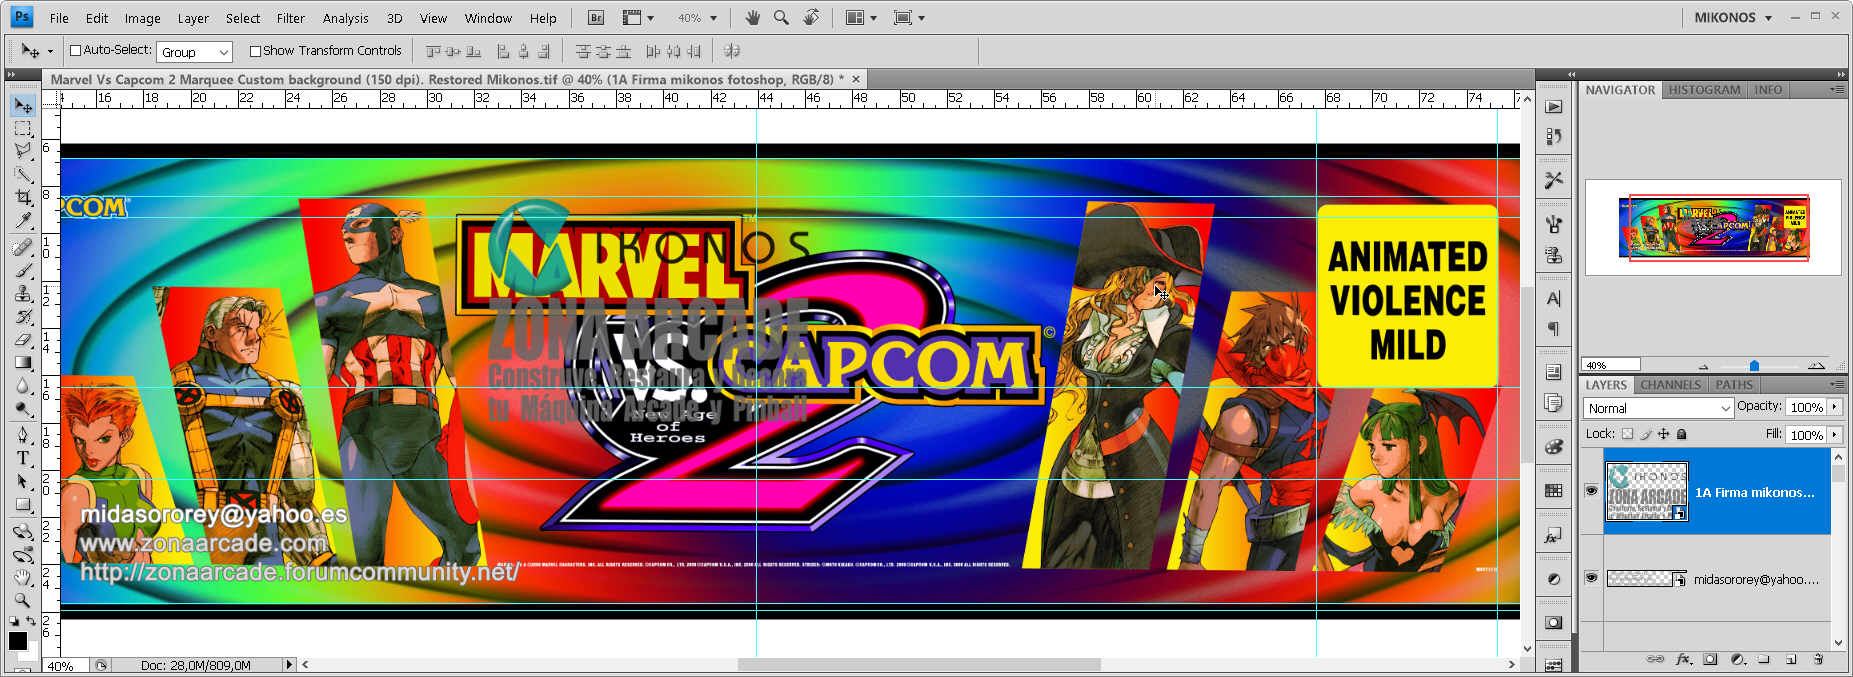 Marvel Vs Capcom 2 Marquee - Custom background.jpg